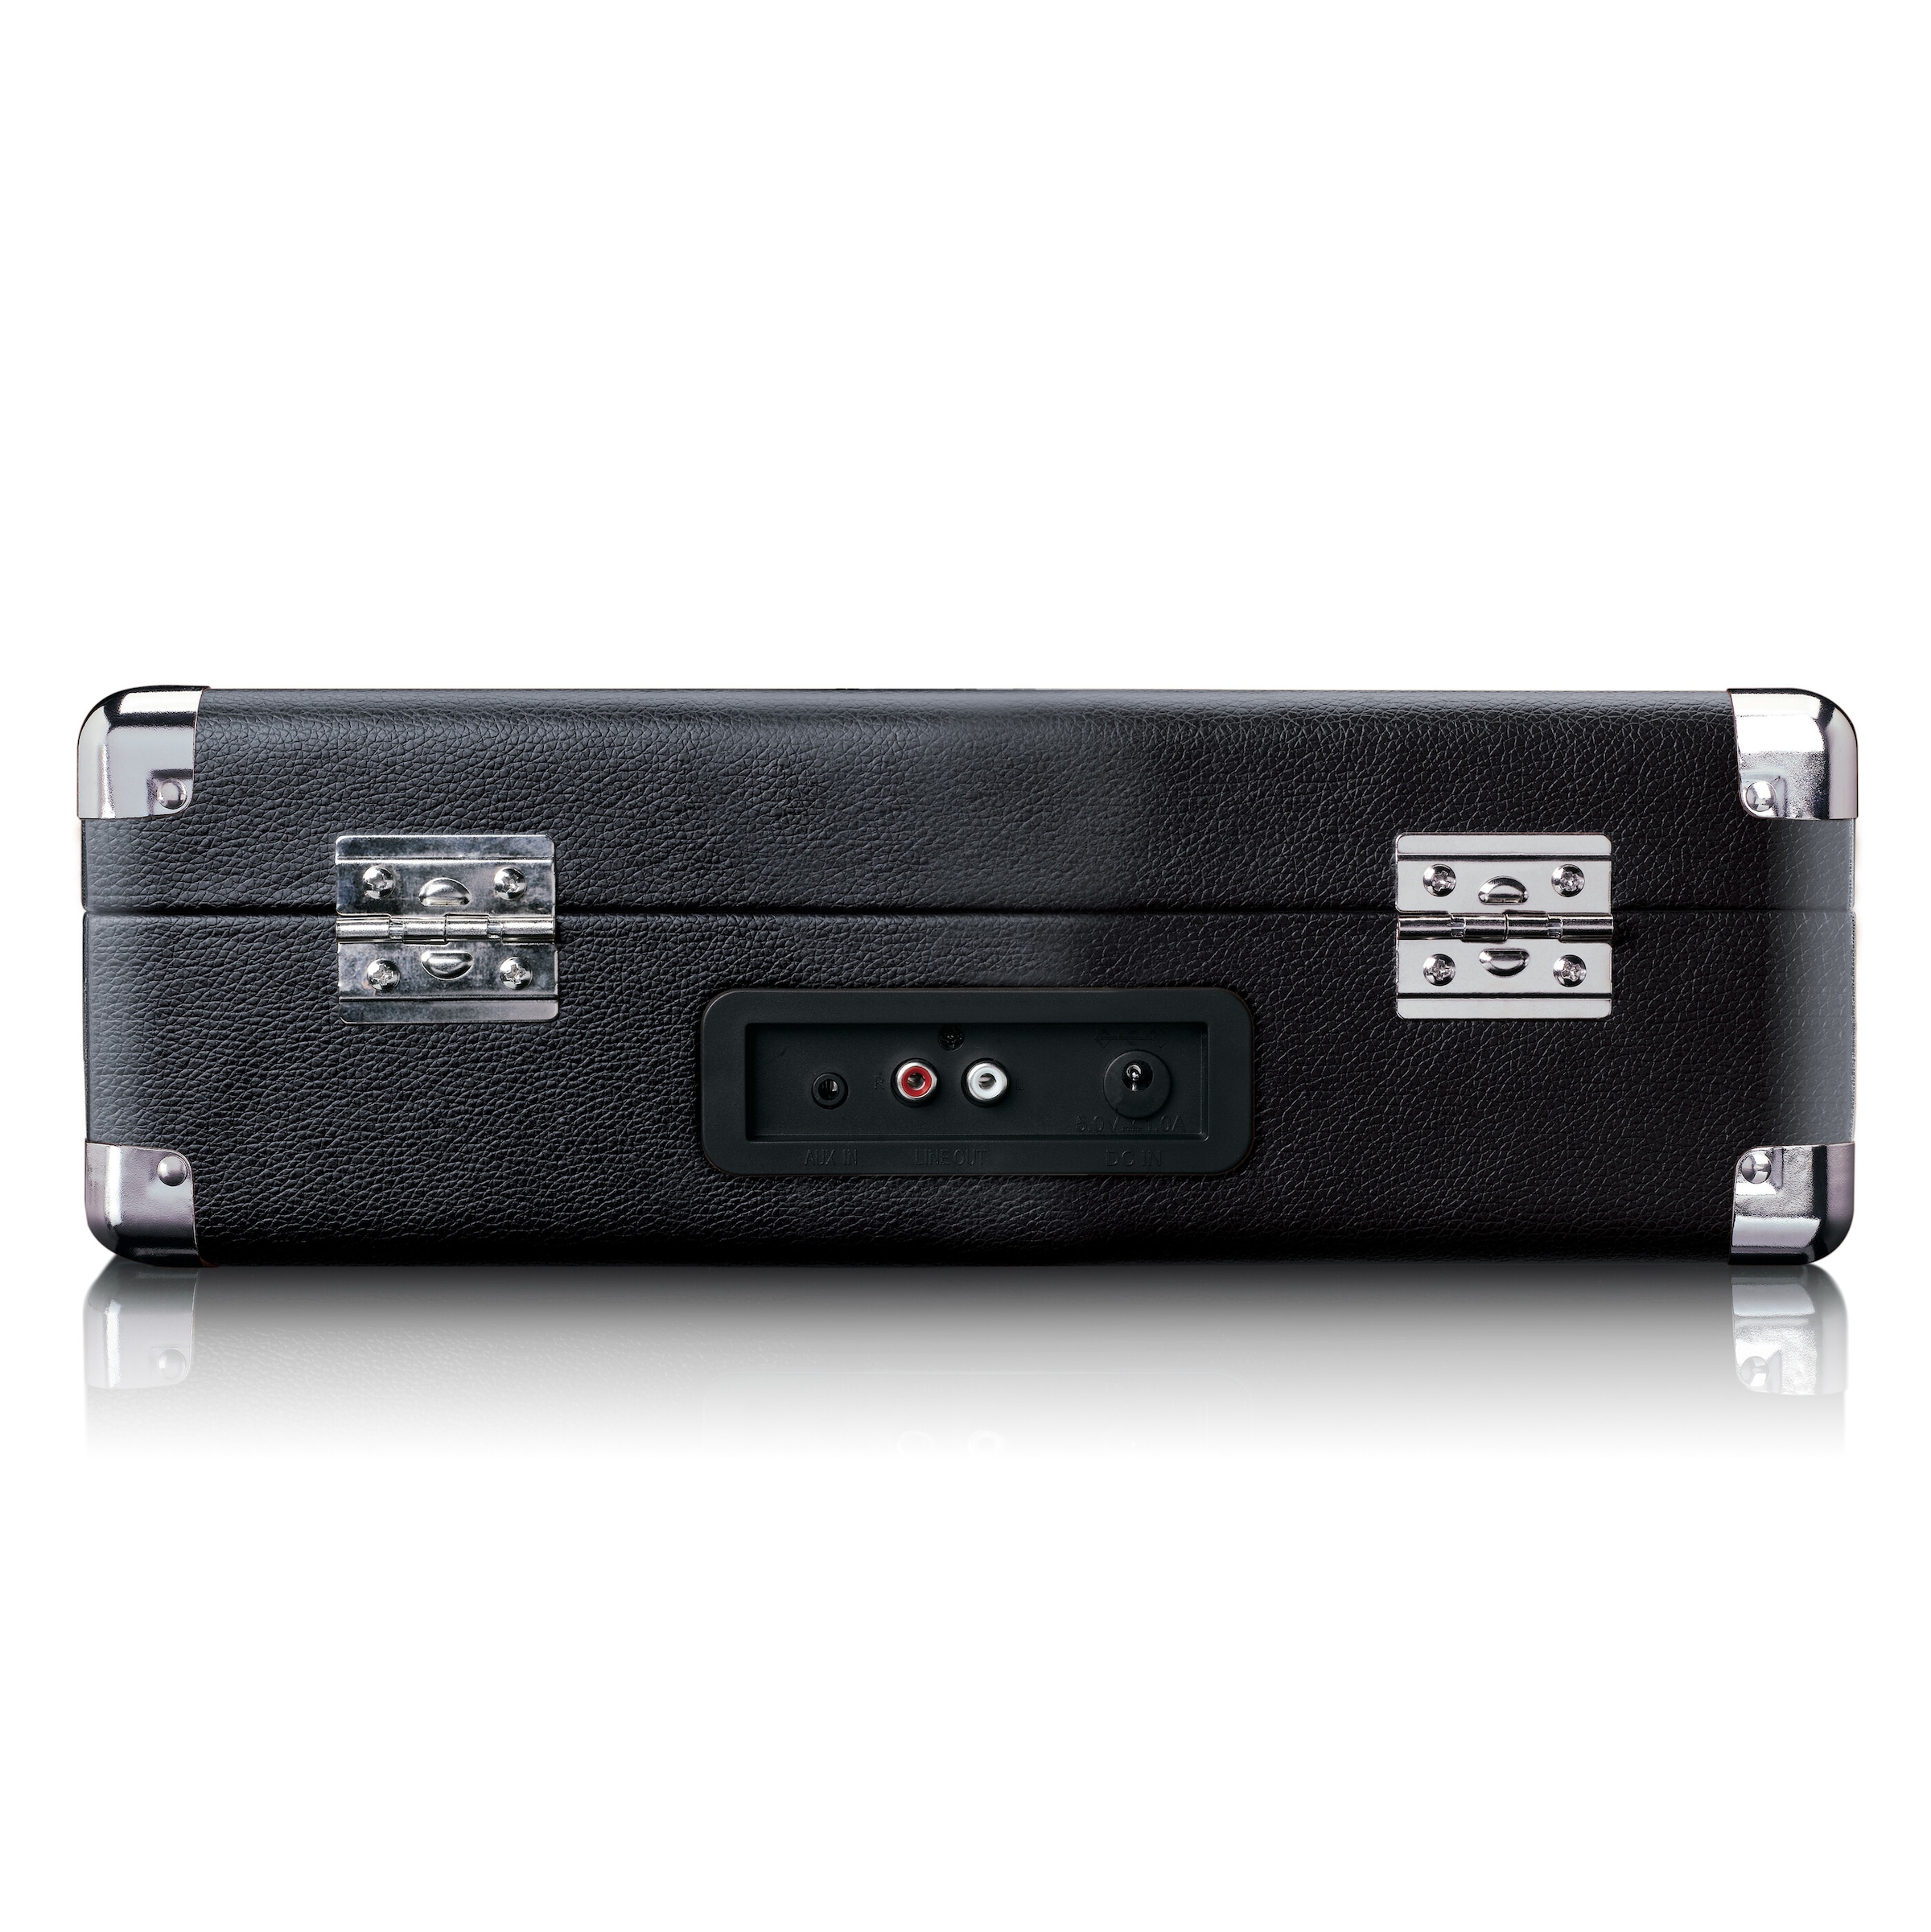 Plattenspieler »Classic Phono TT-115 black«, Lautsprecher integriert,  Bluetooth, Aufnahmefunktion via USB jetzt im OTTO Online Shop